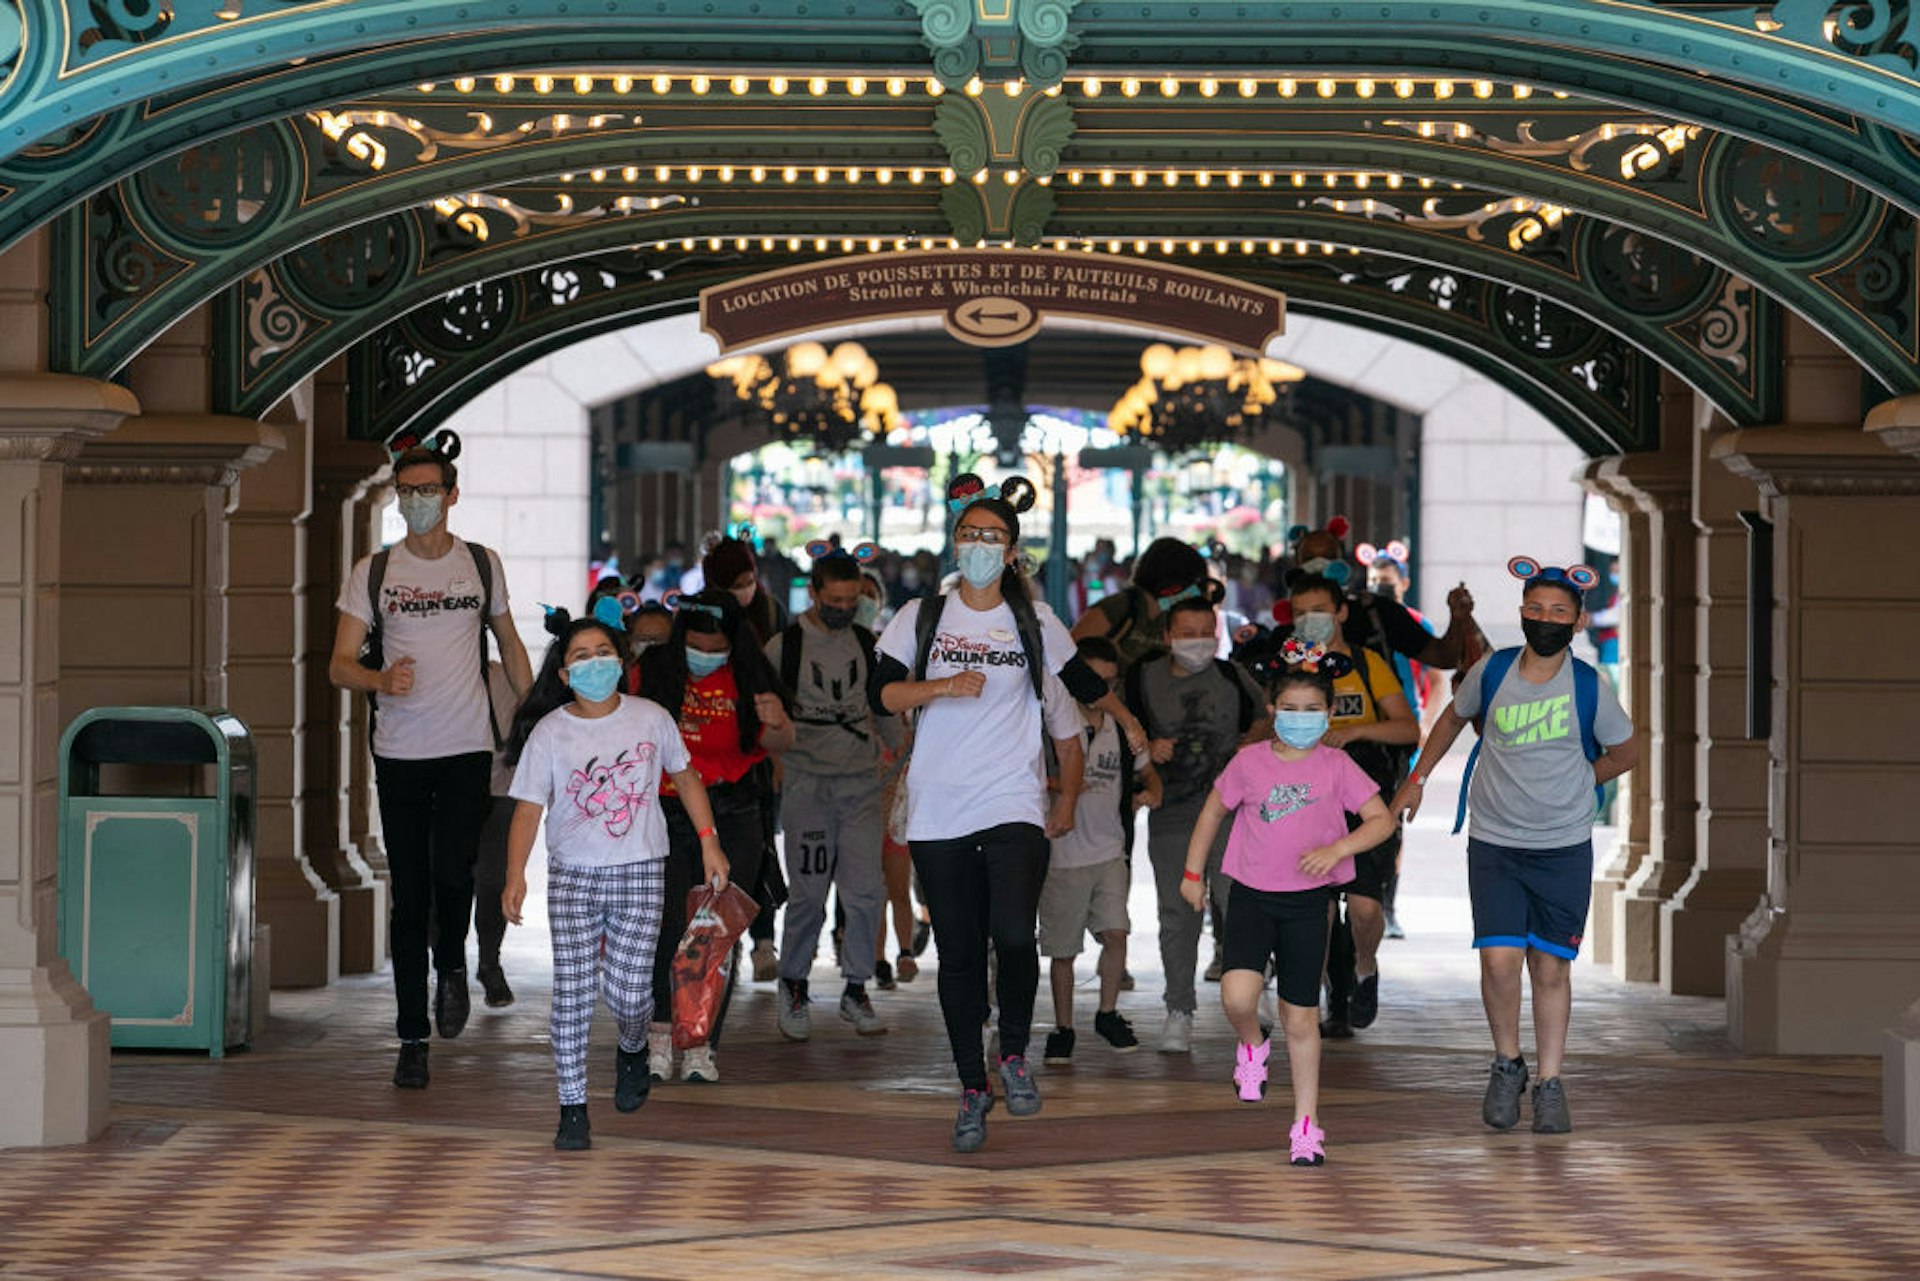 Visitors enter the gates at Disneyland Paris